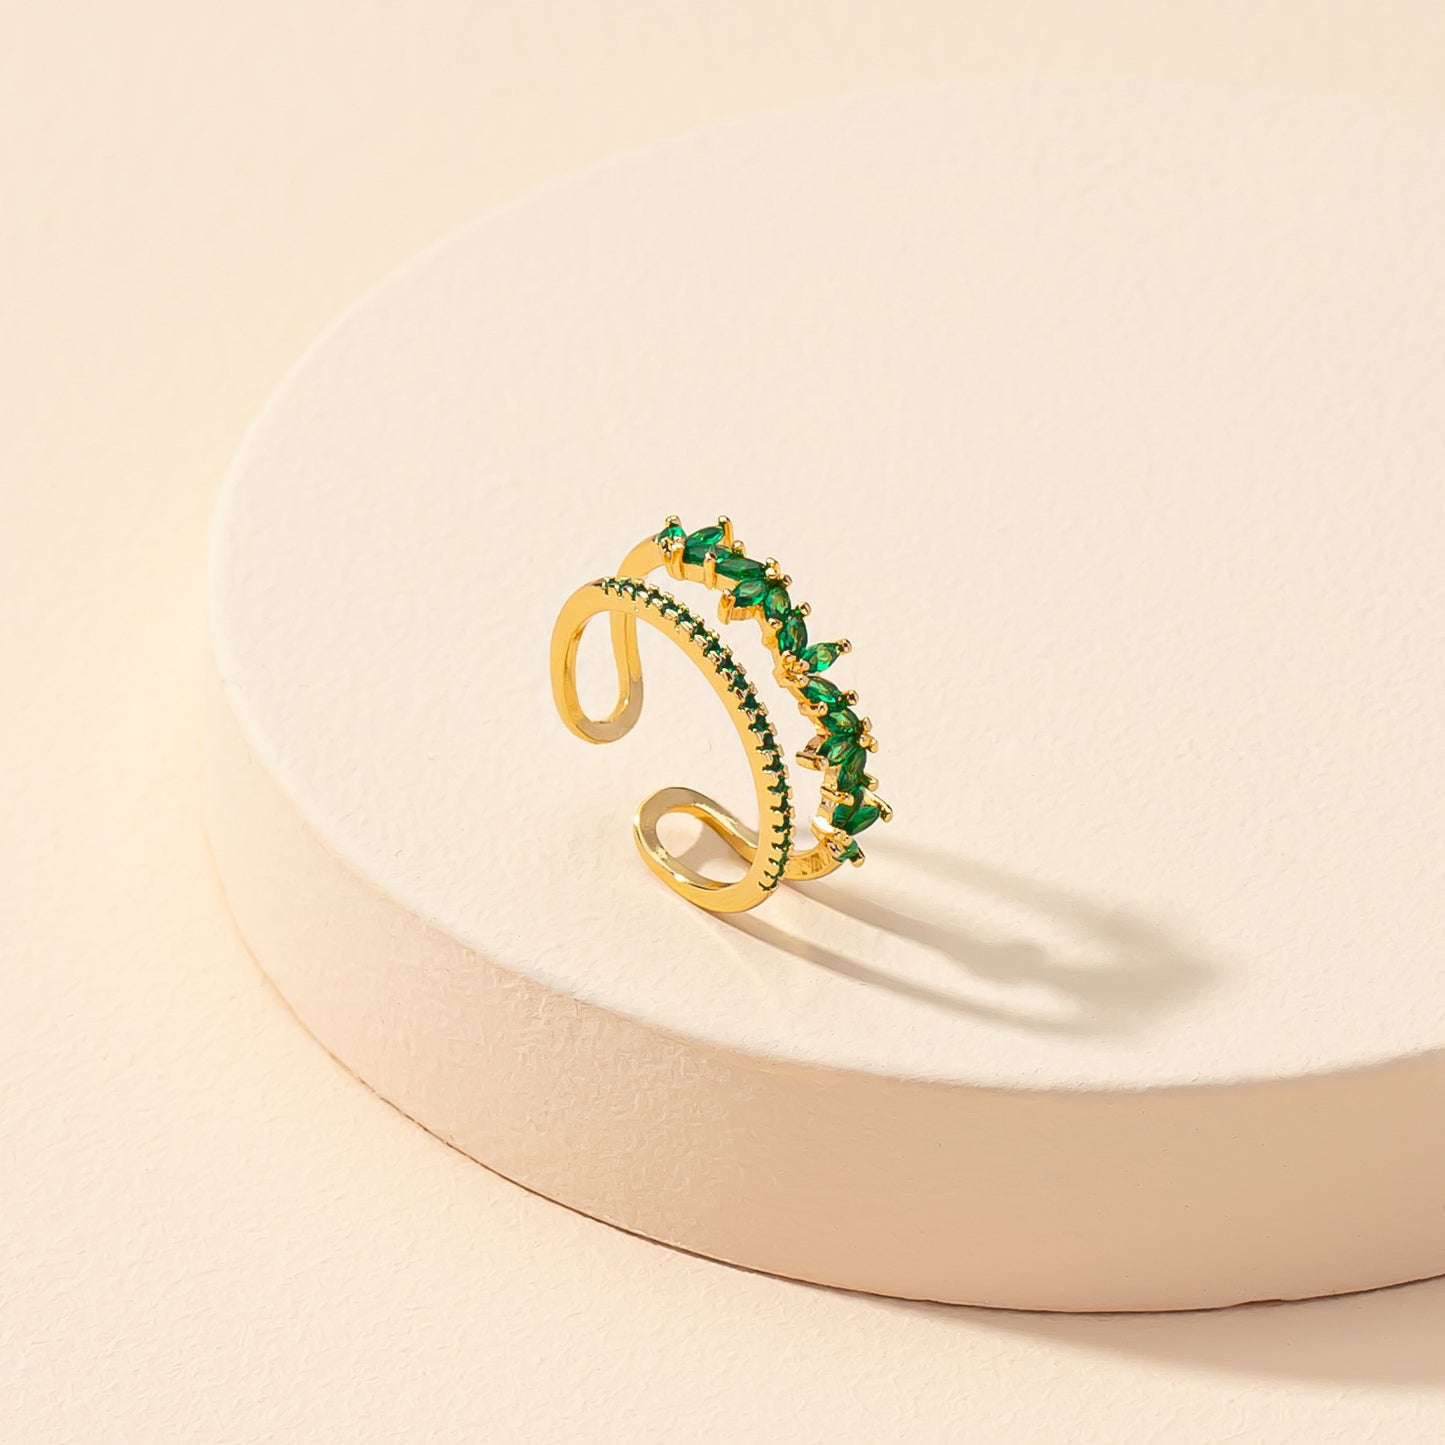 European and American Green Zirconium Copper Ring for Women's Handwear